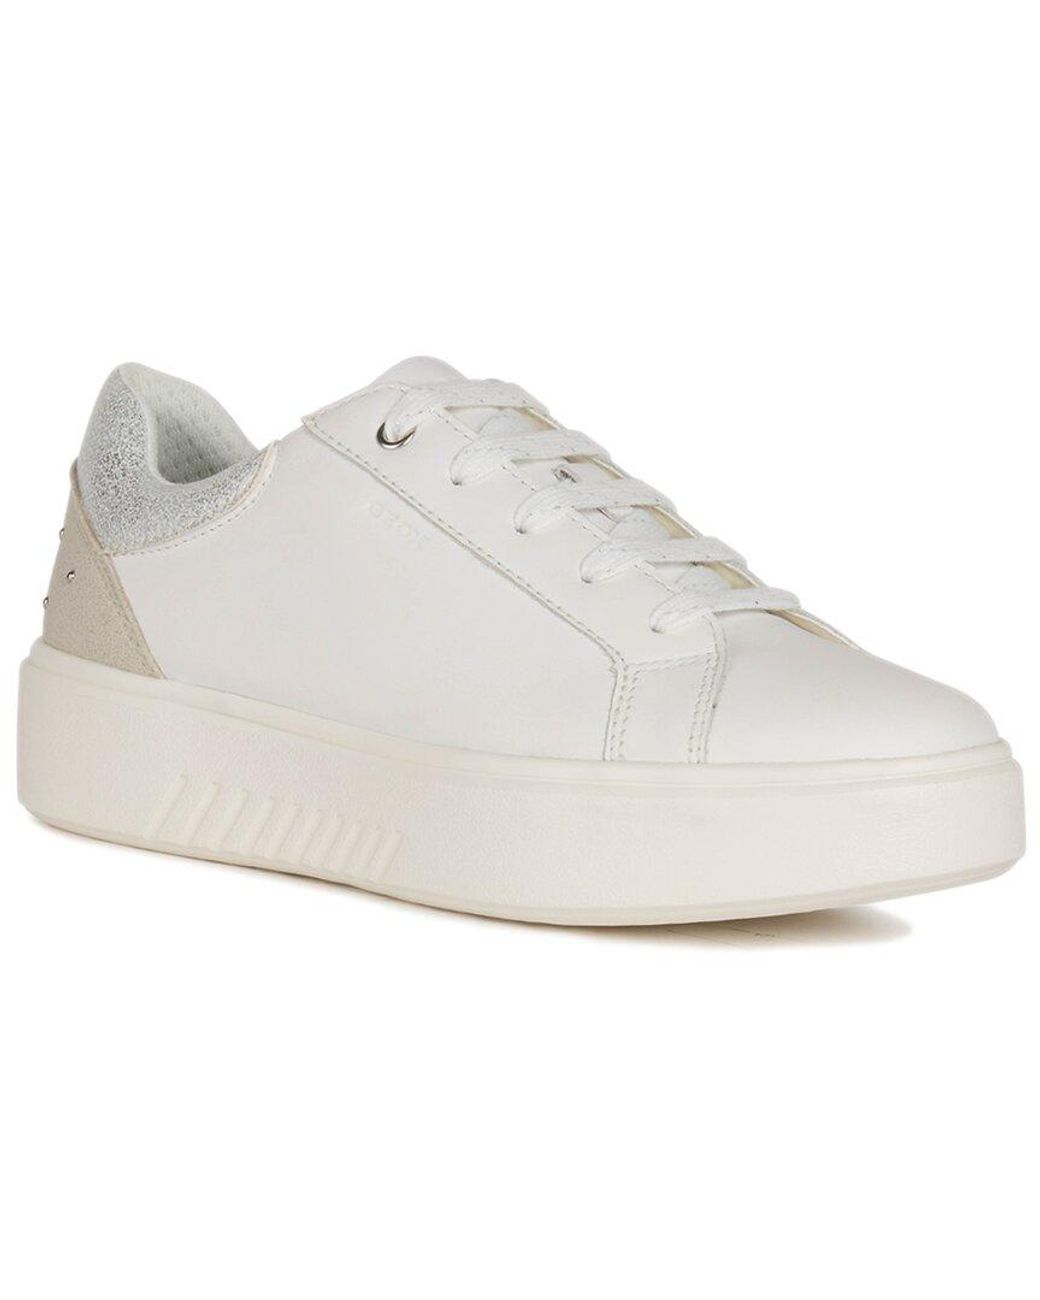 Geox Nhenbus Sneaker in White | Lyst Canada